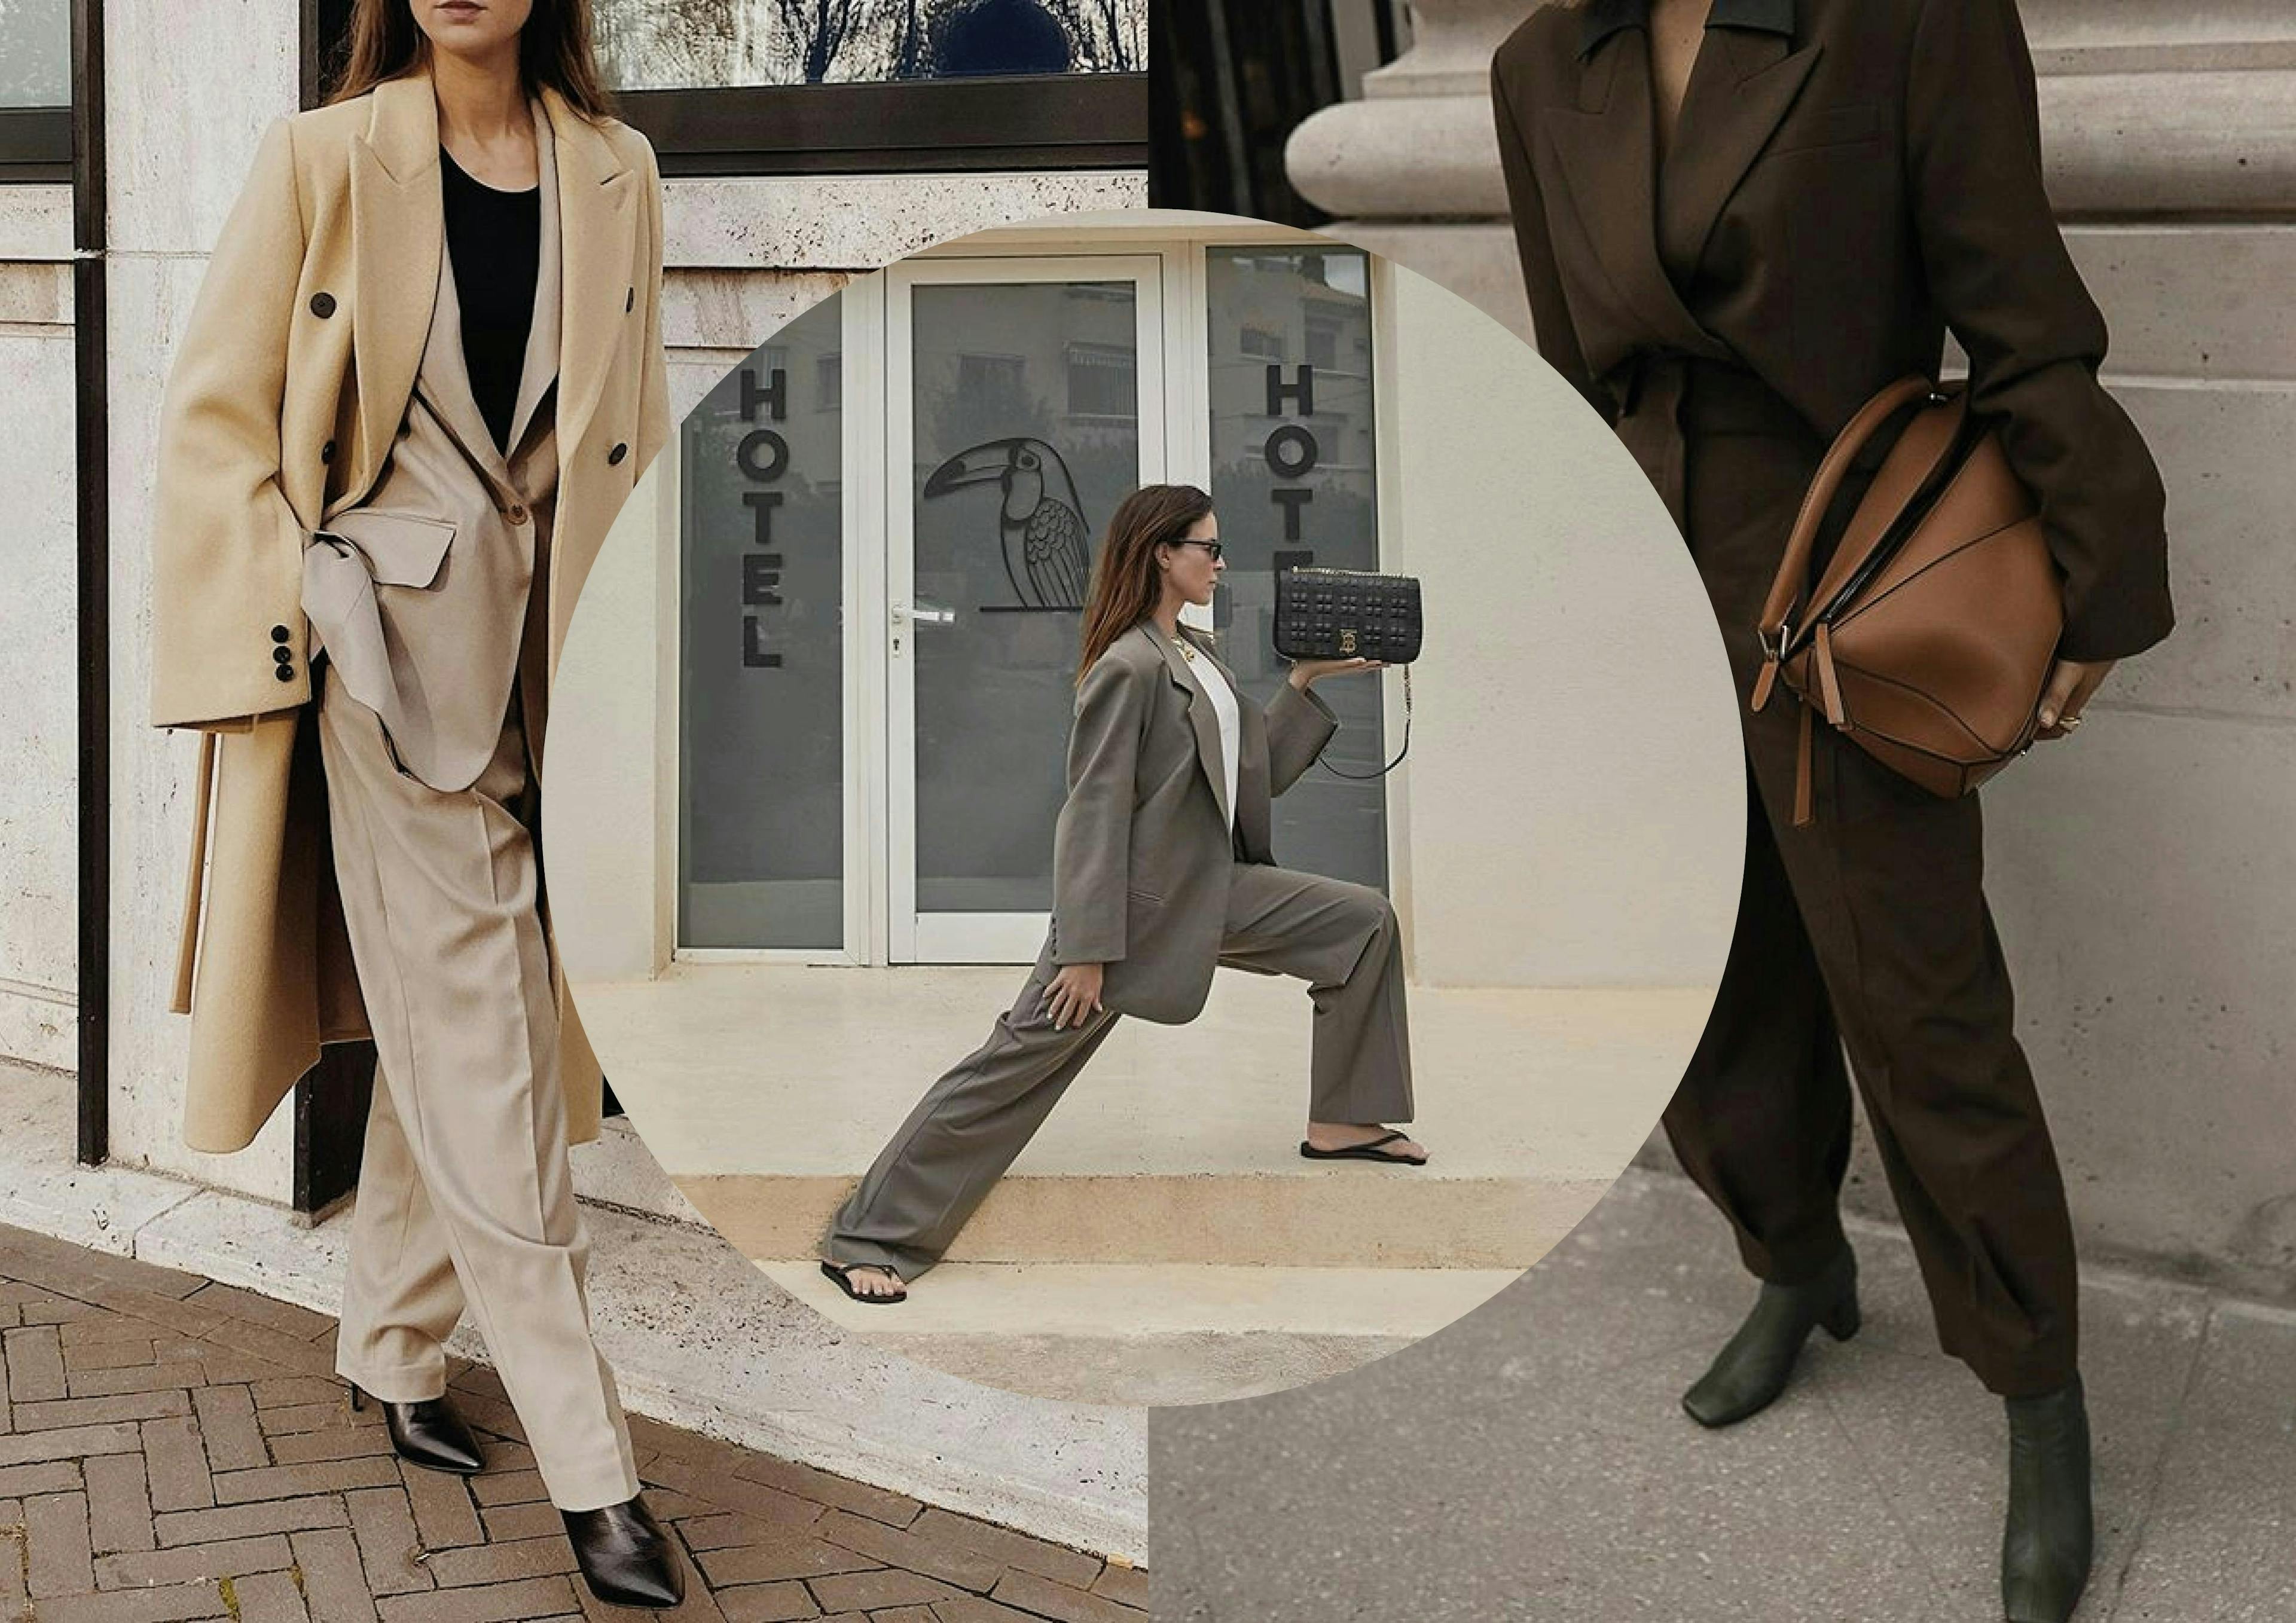 clothing apparel overcoat coat person human suit shoe footwear trench coat